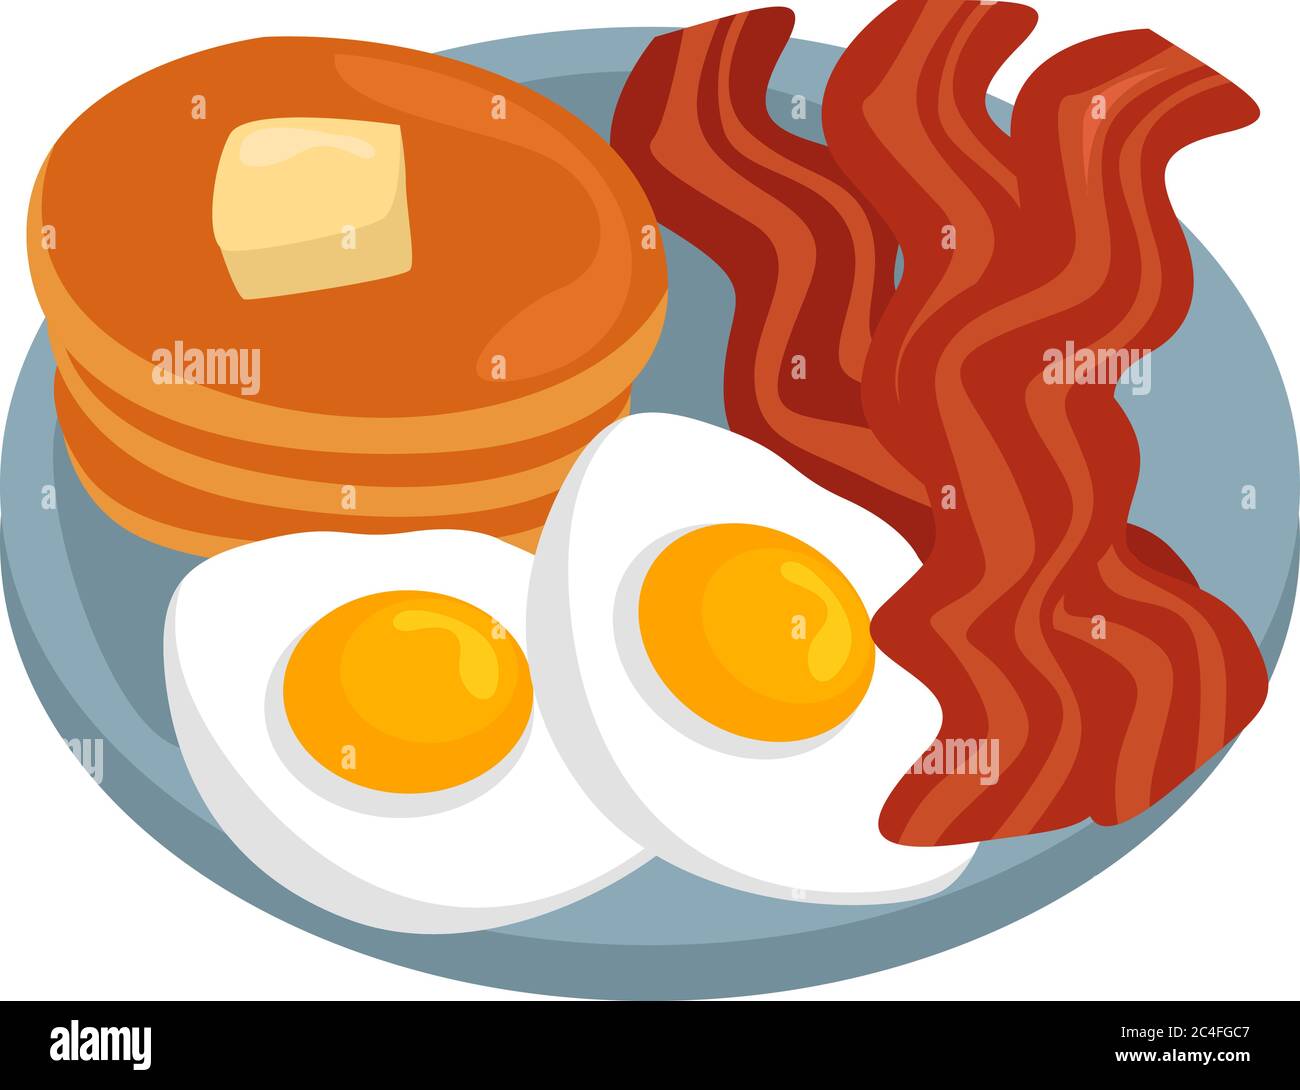 Great breakfast, illustration, vector on white background Stock Vector